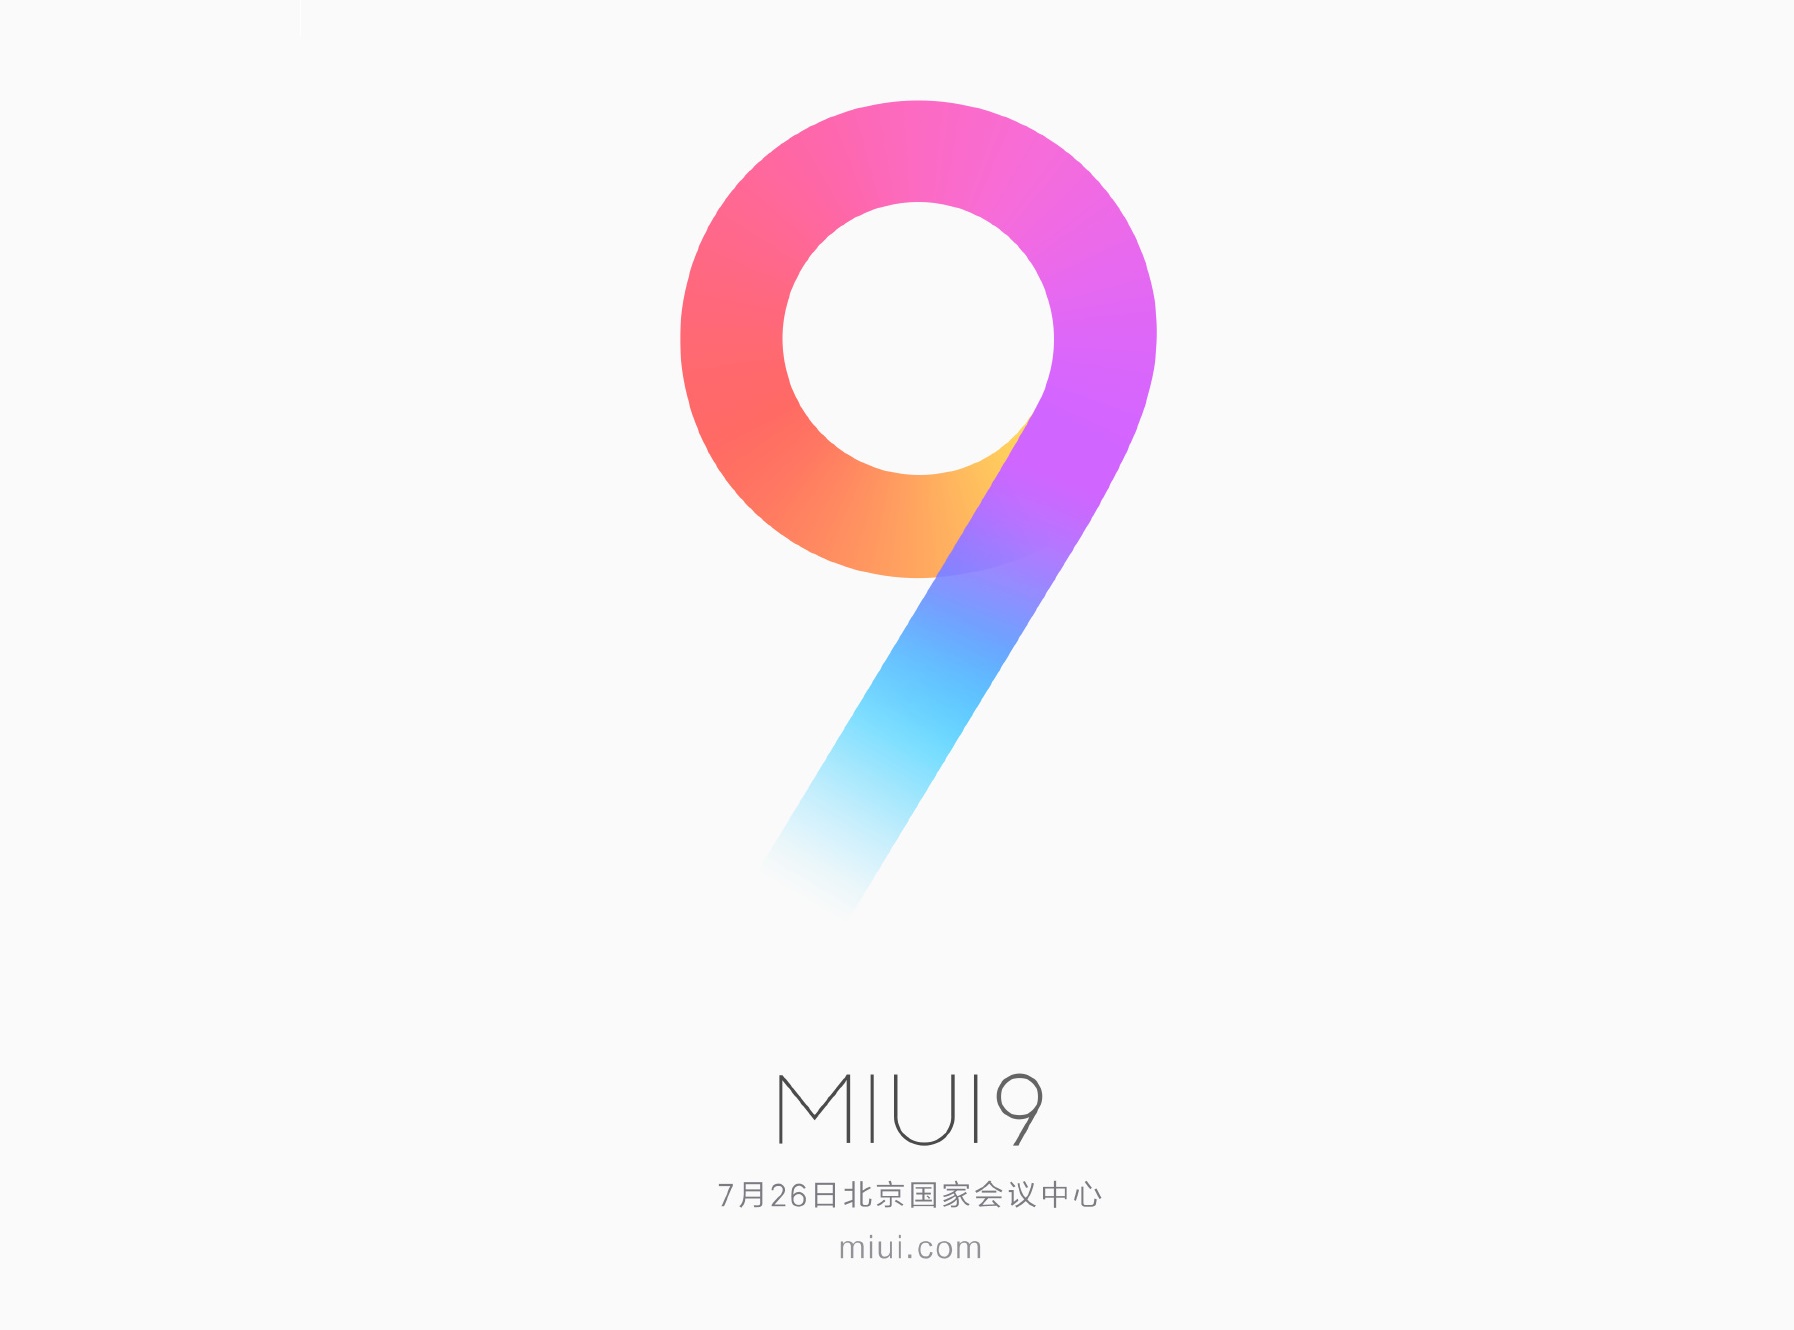 Телефон miui 9. MIUI. MIUI 9. Логотип миуи. MIUI 8 logo.